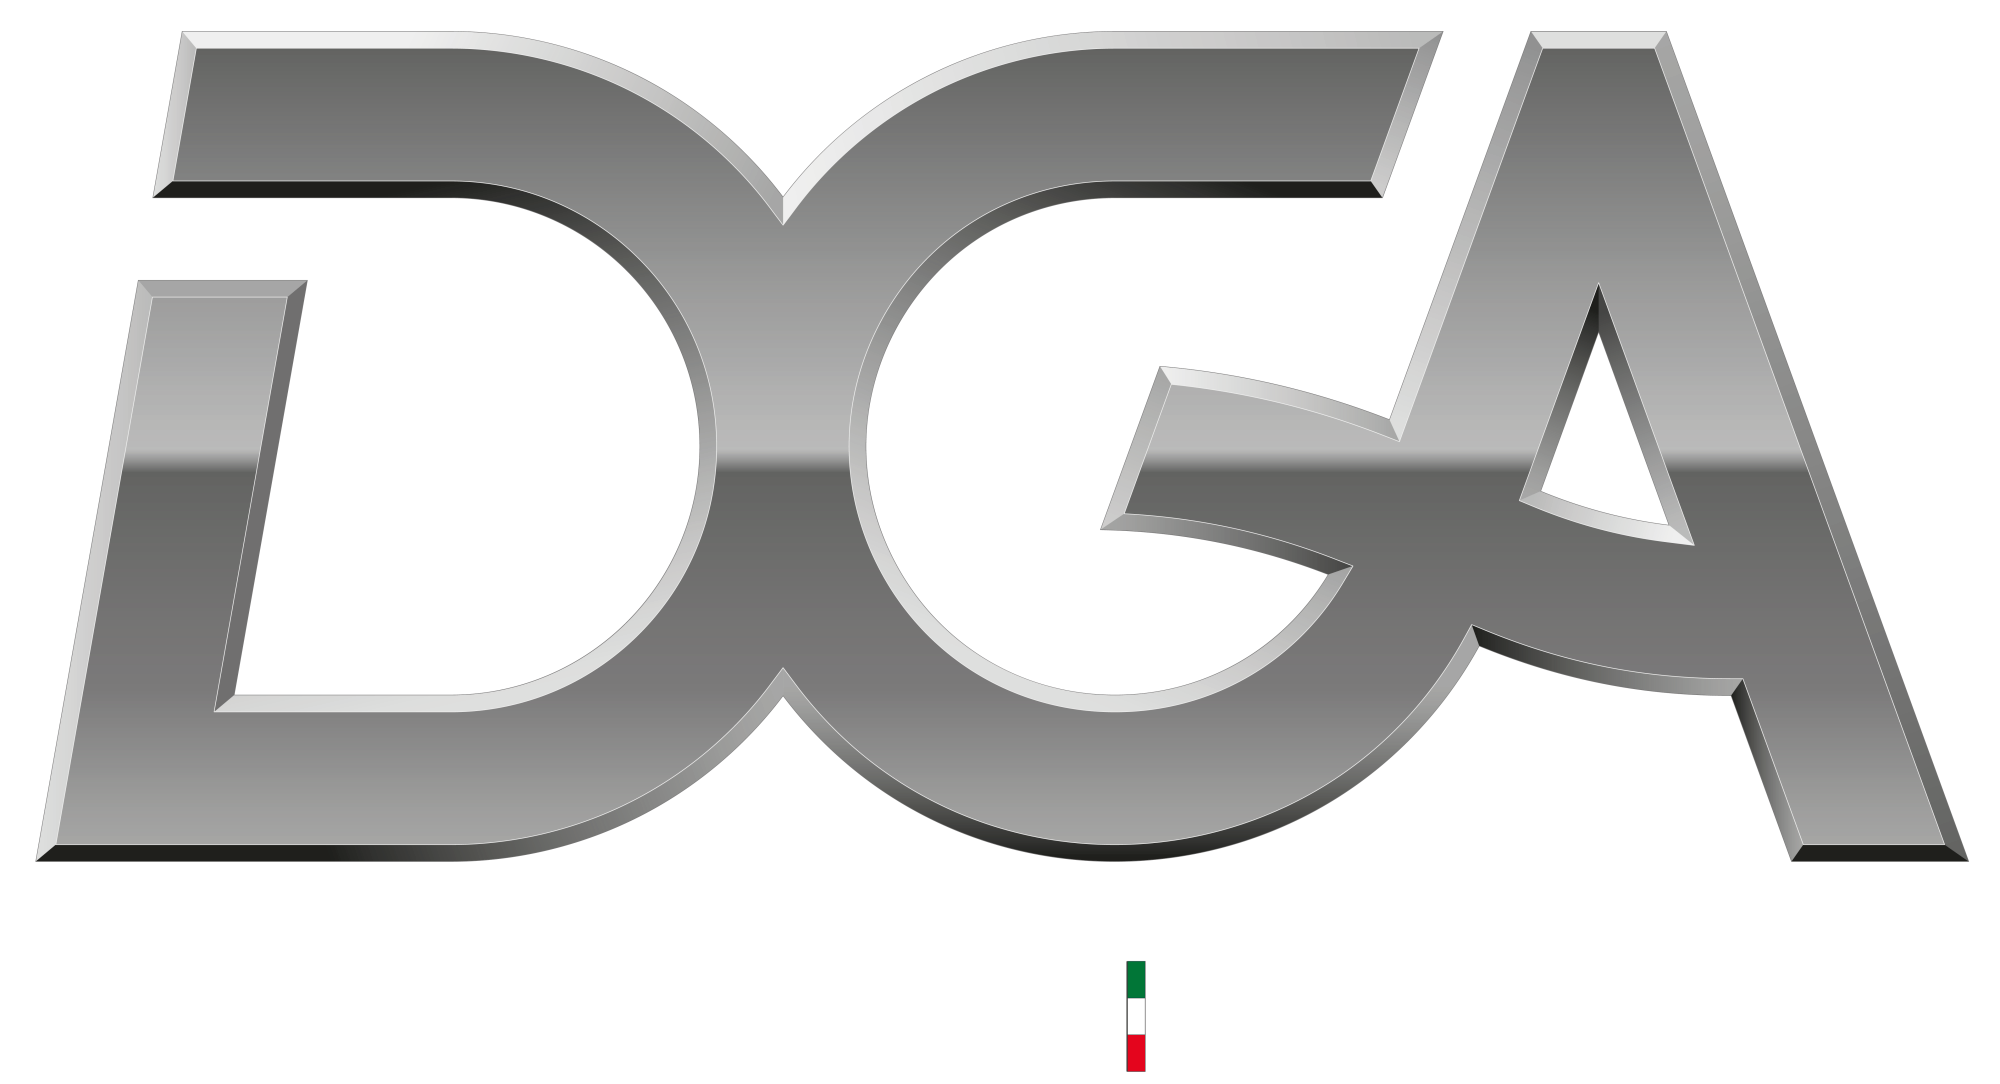 DGA GROUP ITALIA Digital Mobility